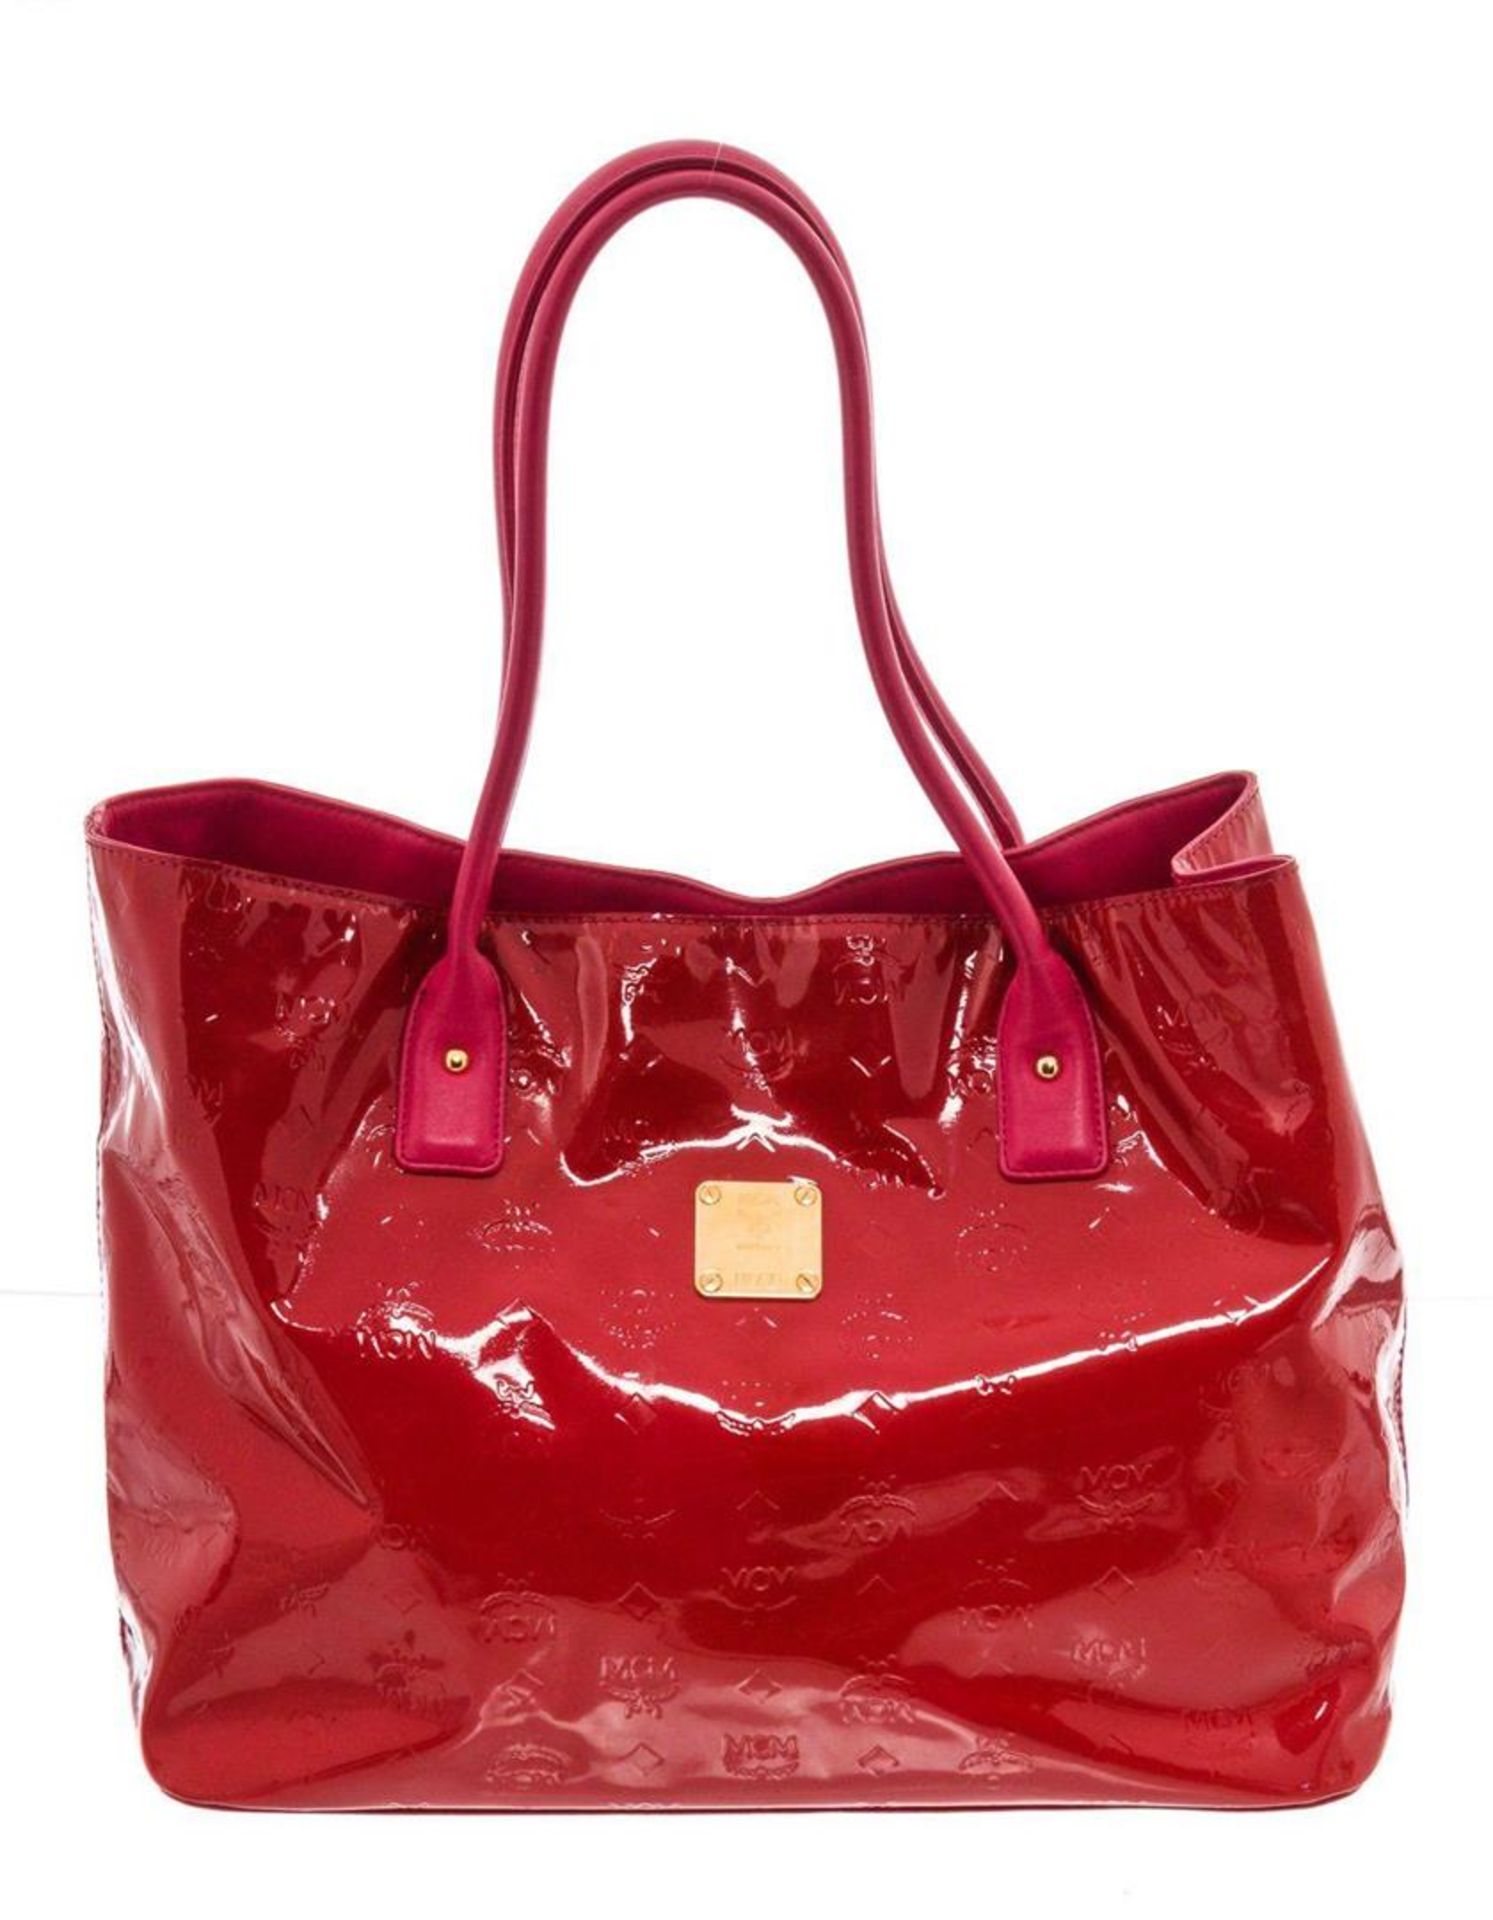 MCM Red Patent Shopper Tote Bag